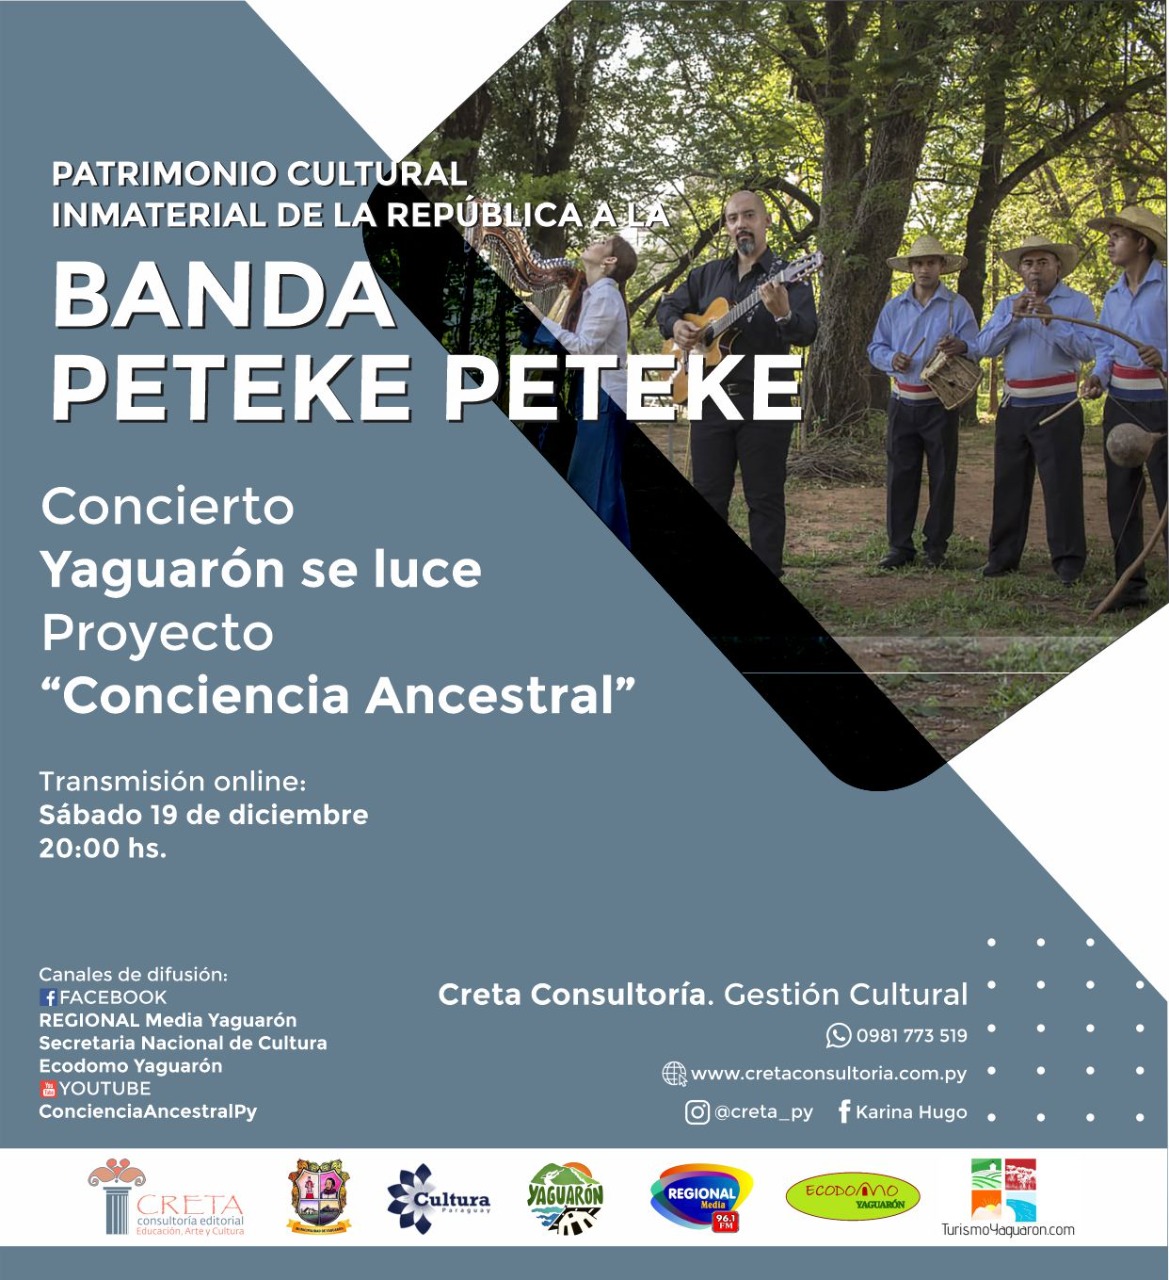 Realizarán concierto en homenaje a la banda Peteke Peteke en Yaguarón imagen